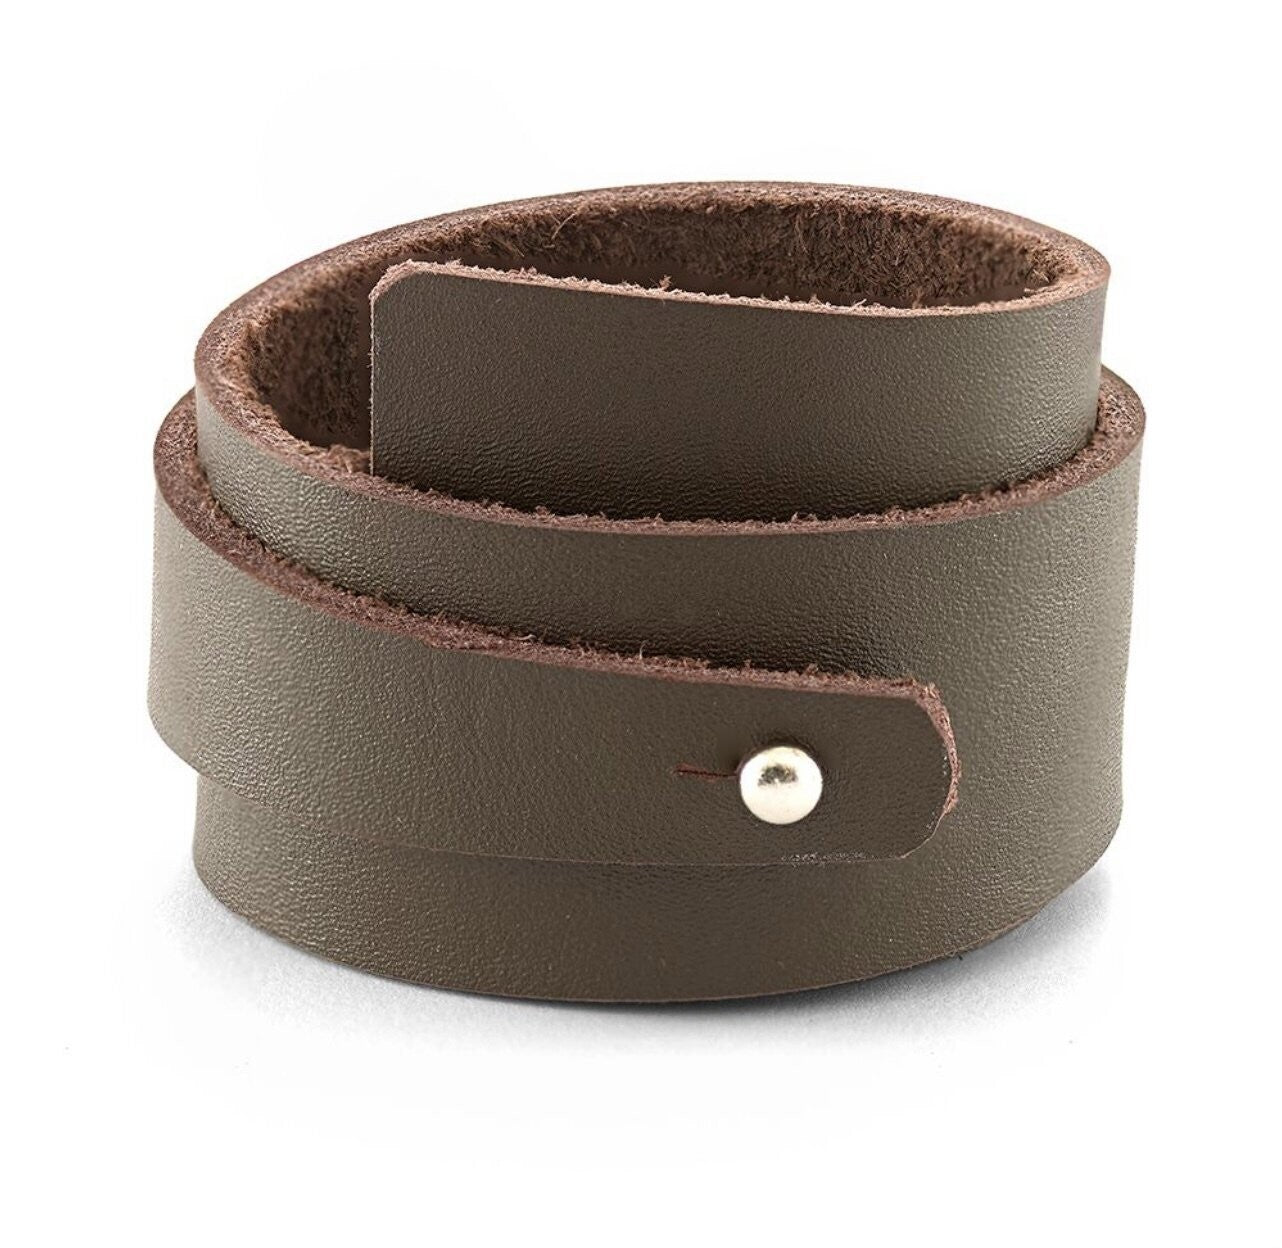 Ede & Addison Brown Leather Cuff bracelet